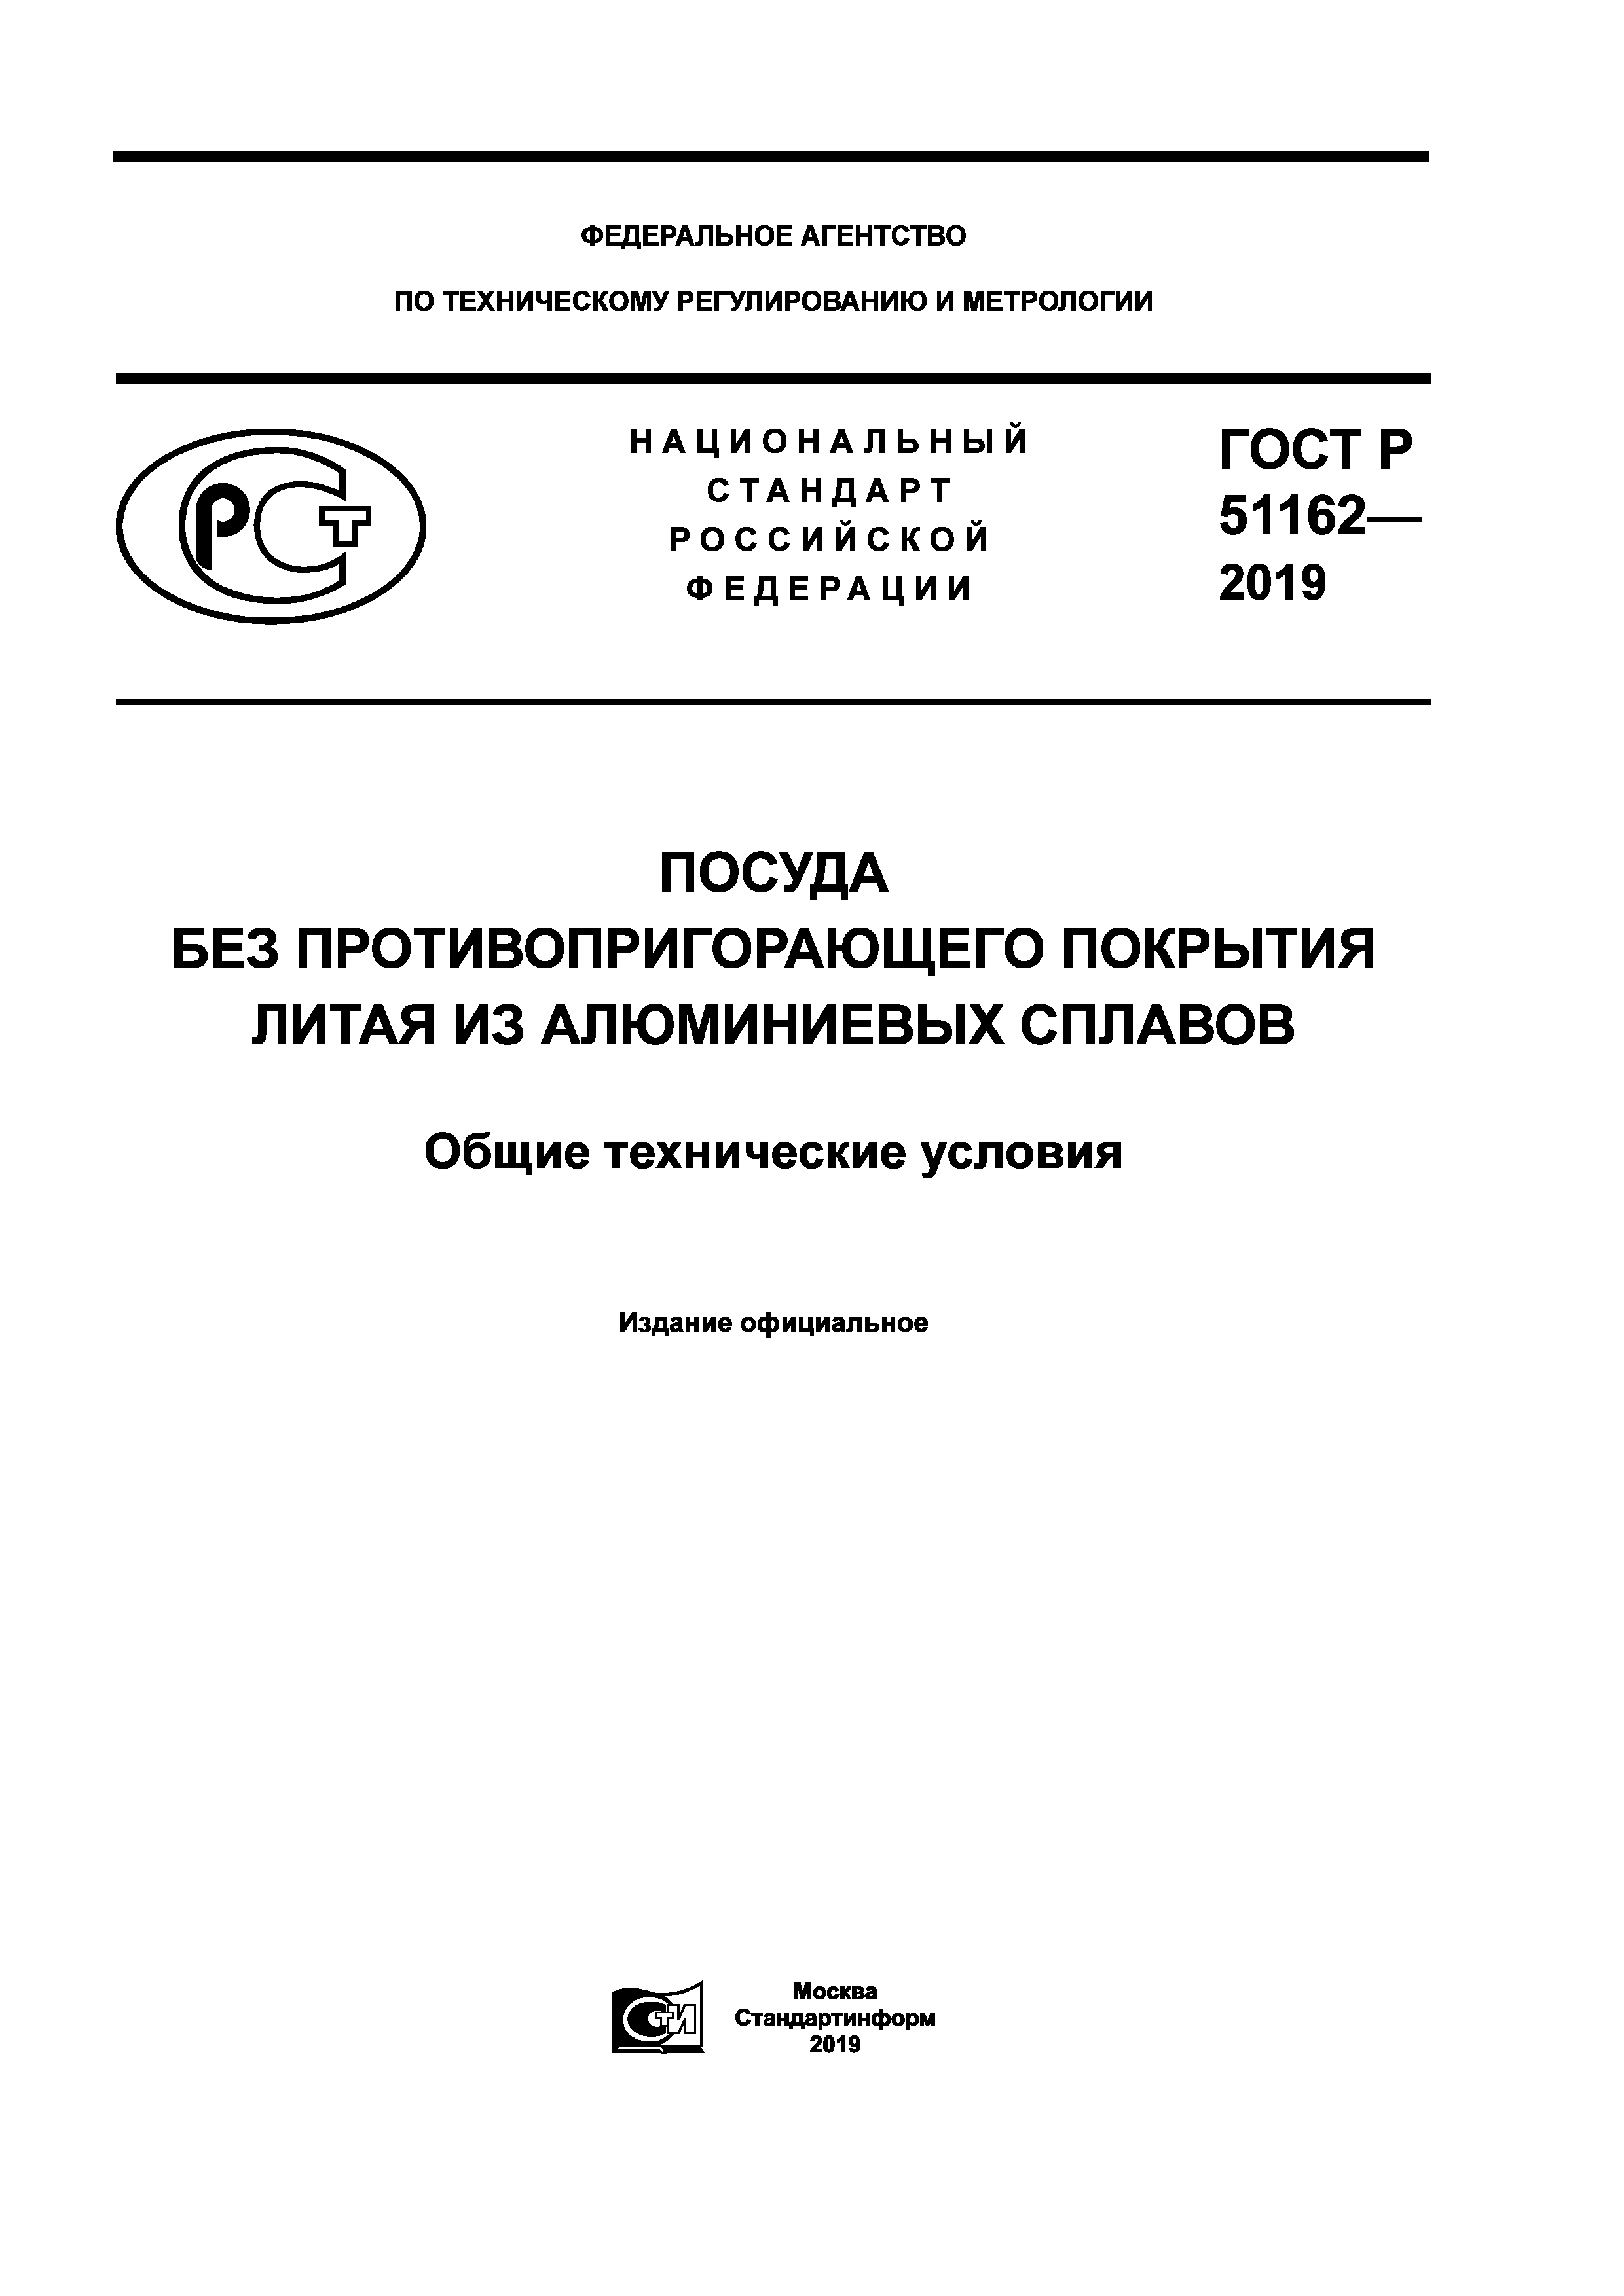 ГОСТ Р 51162-2019